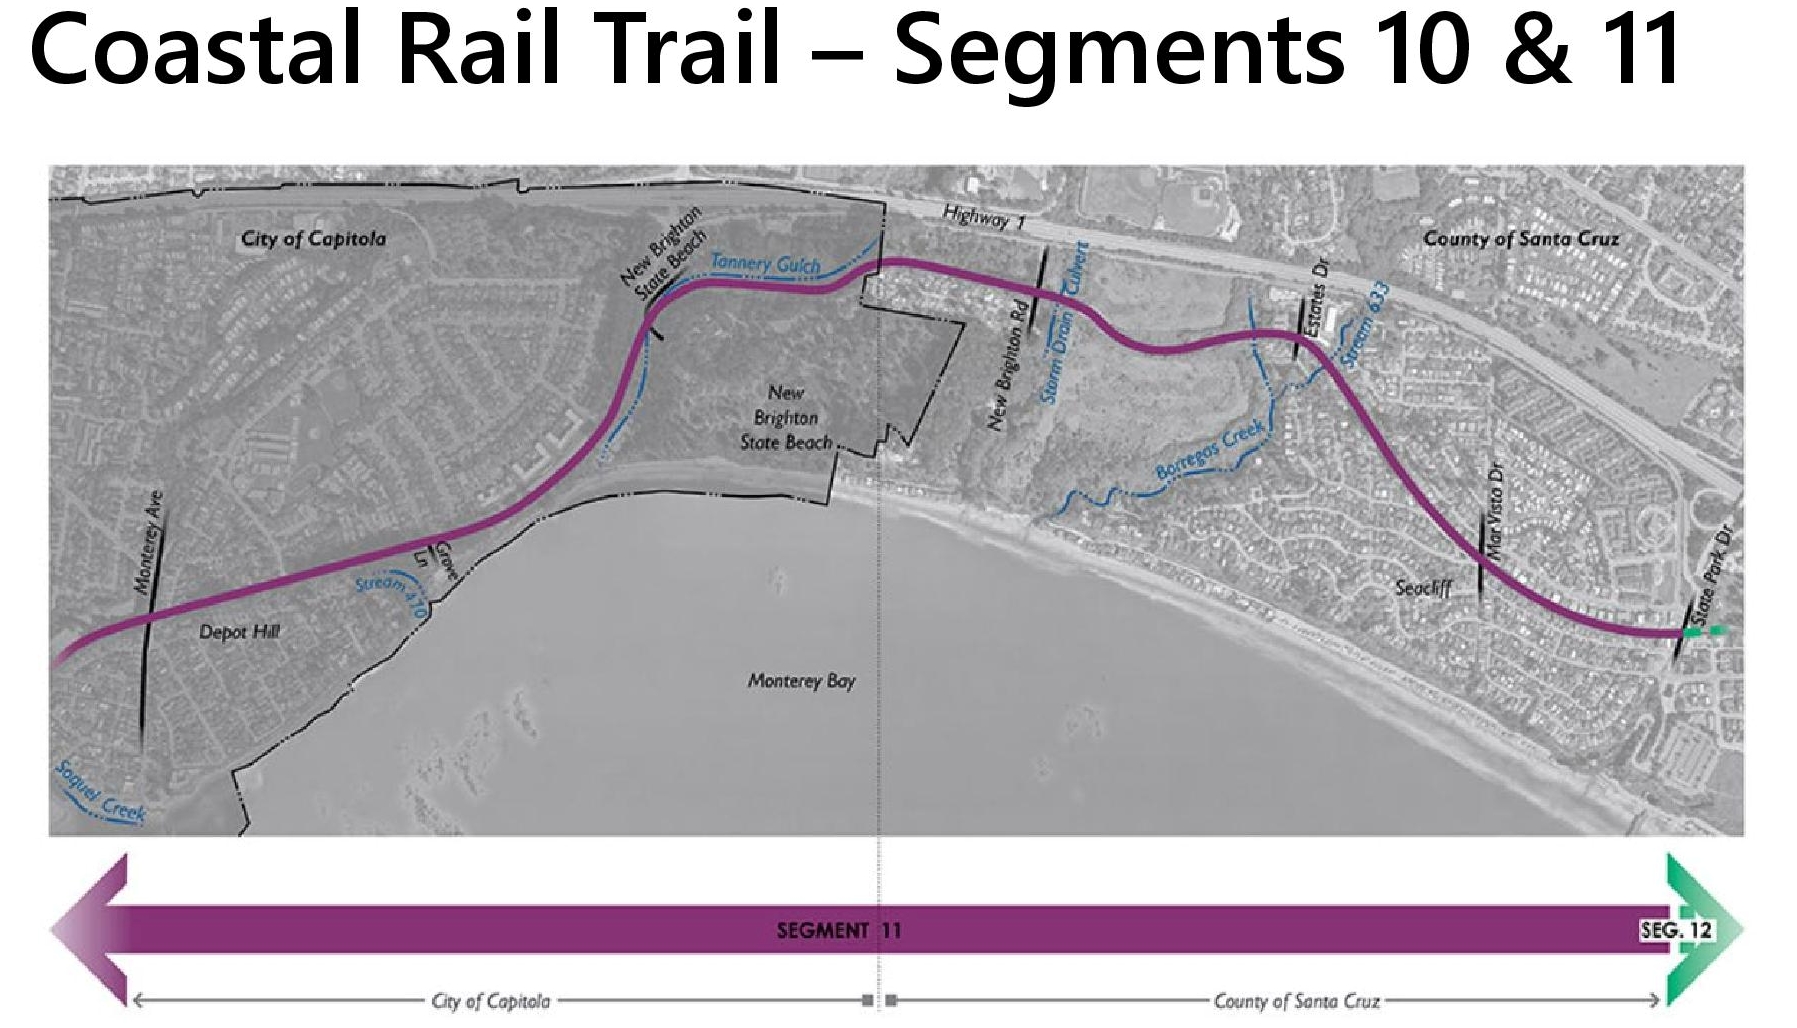 A map shows segment 11 of the Coastal Rail Trail in Santa Cruz County.